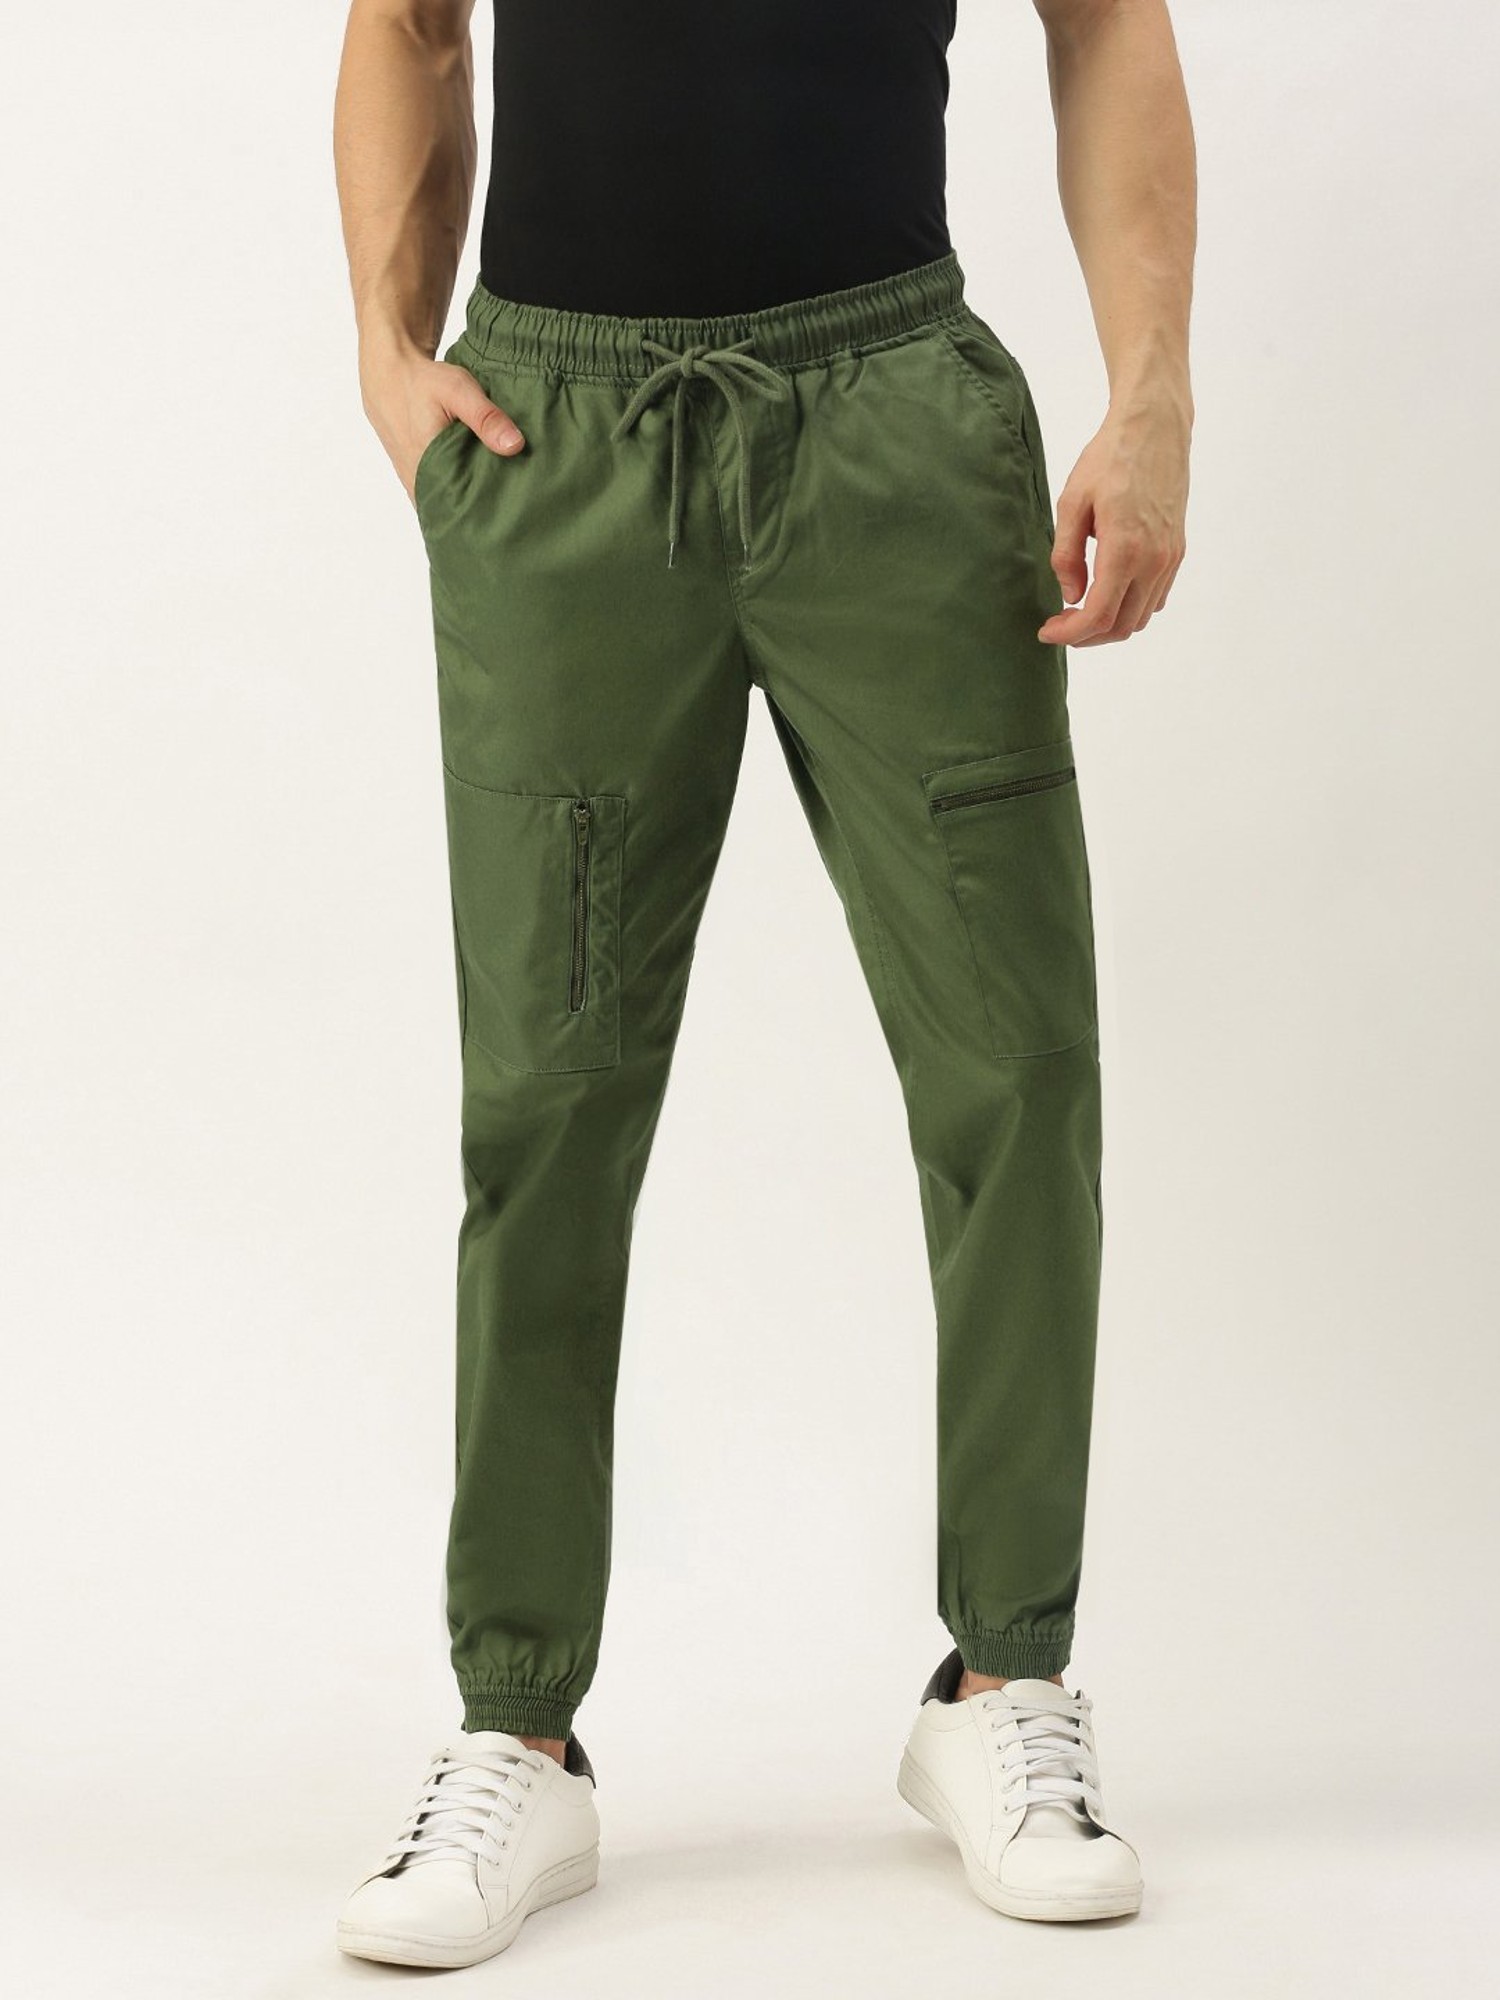 Buy IVOC Green Regular Fit Cotton Jogger Pants for Men's Online